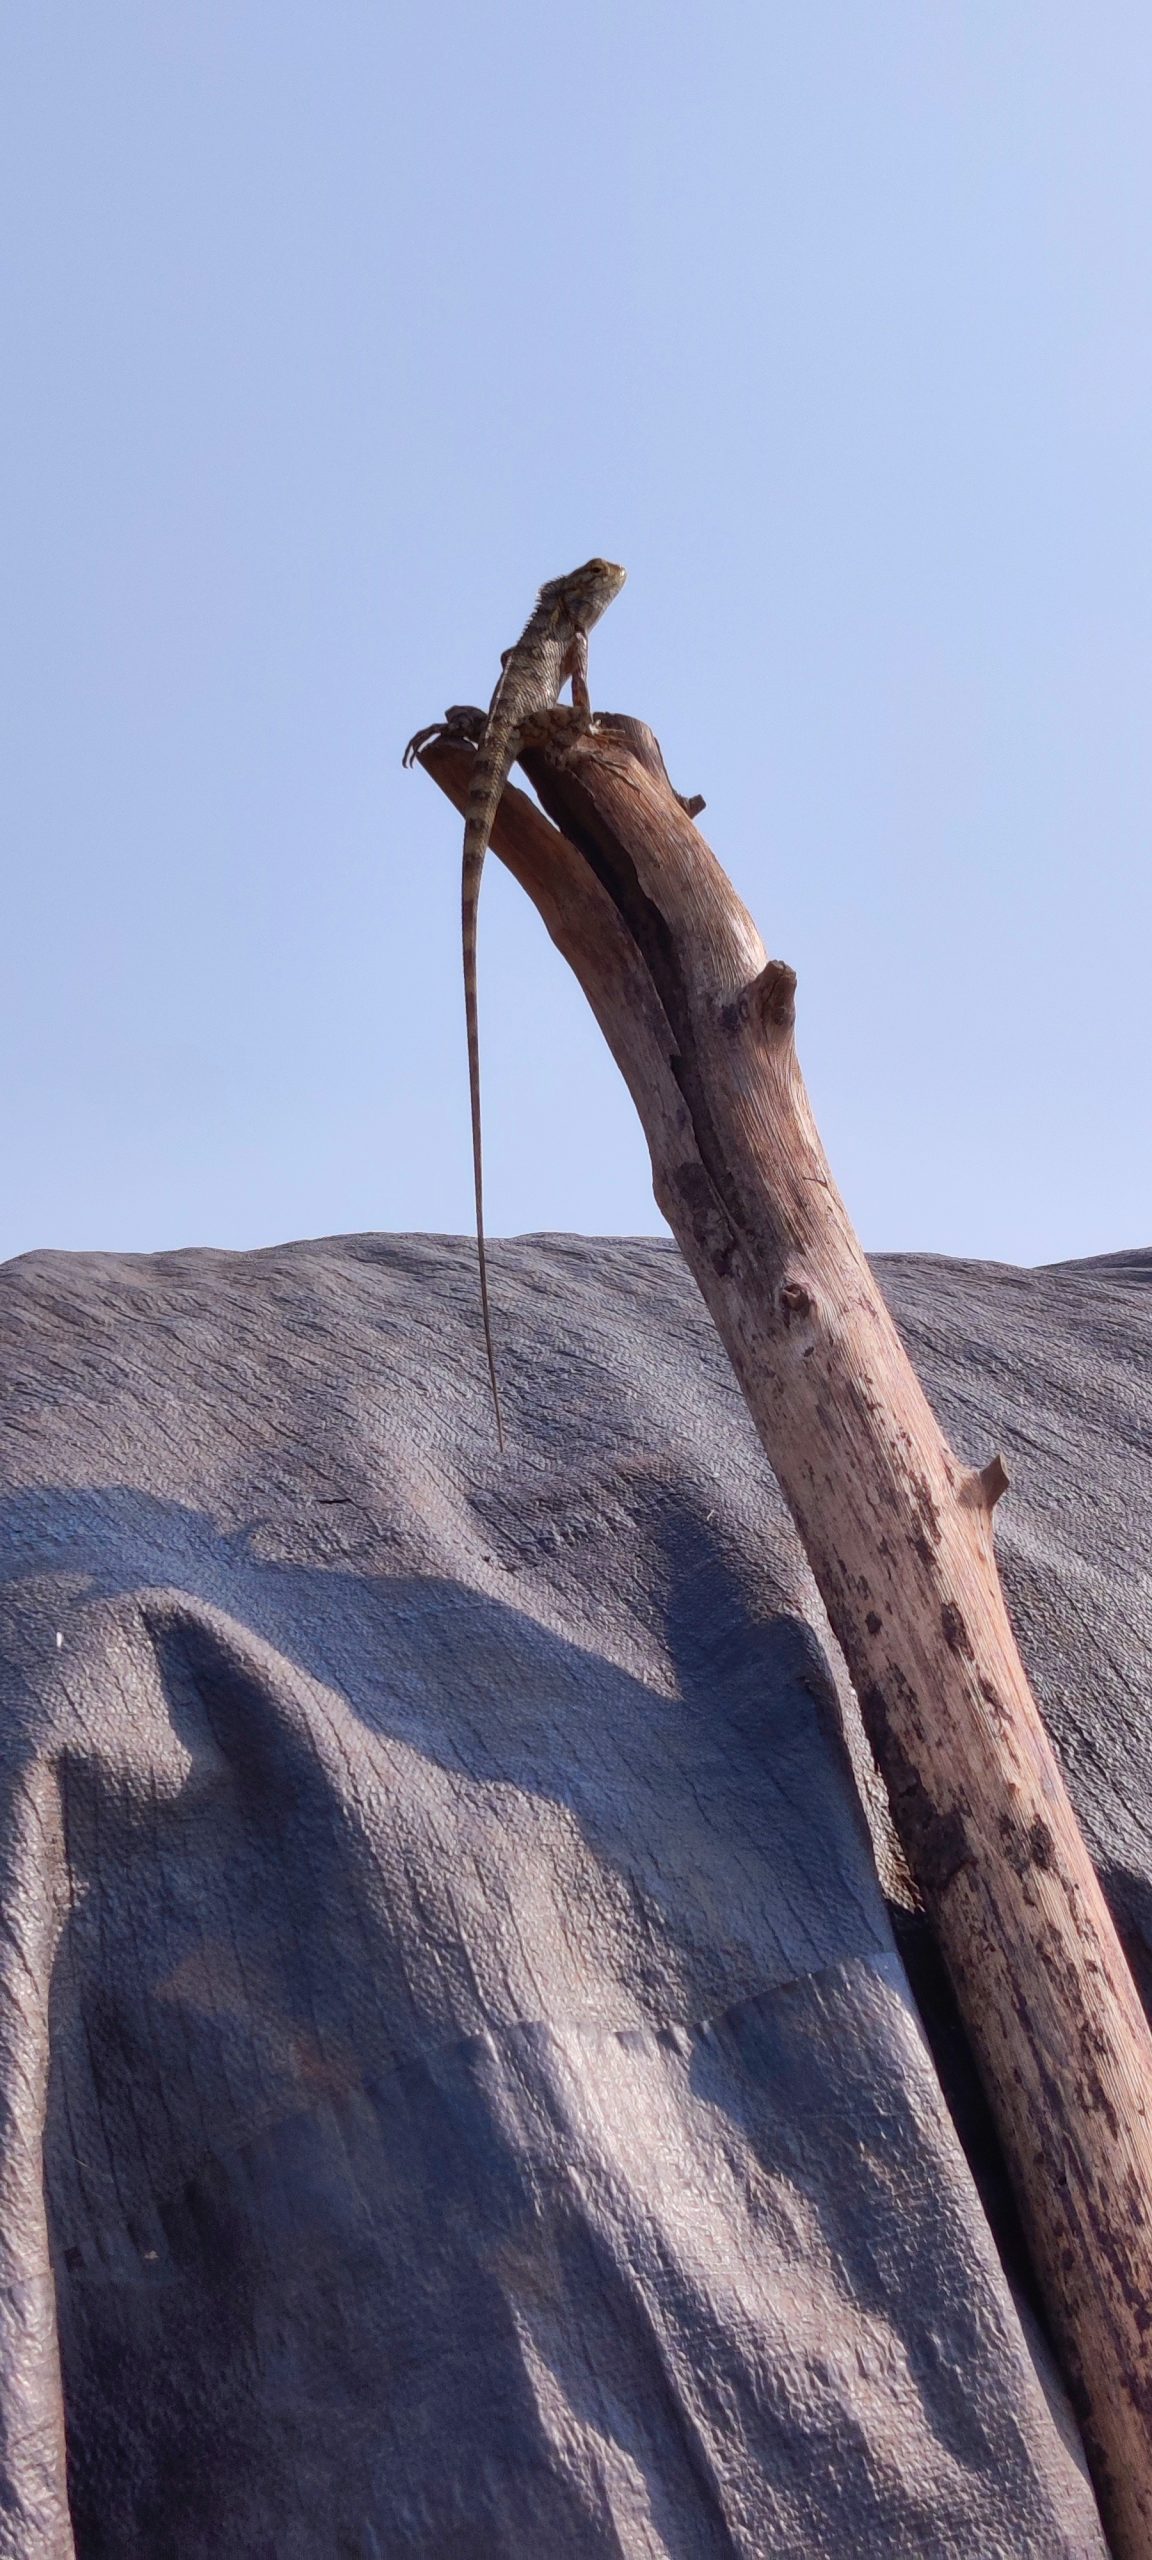 A lizard on a wooden pole